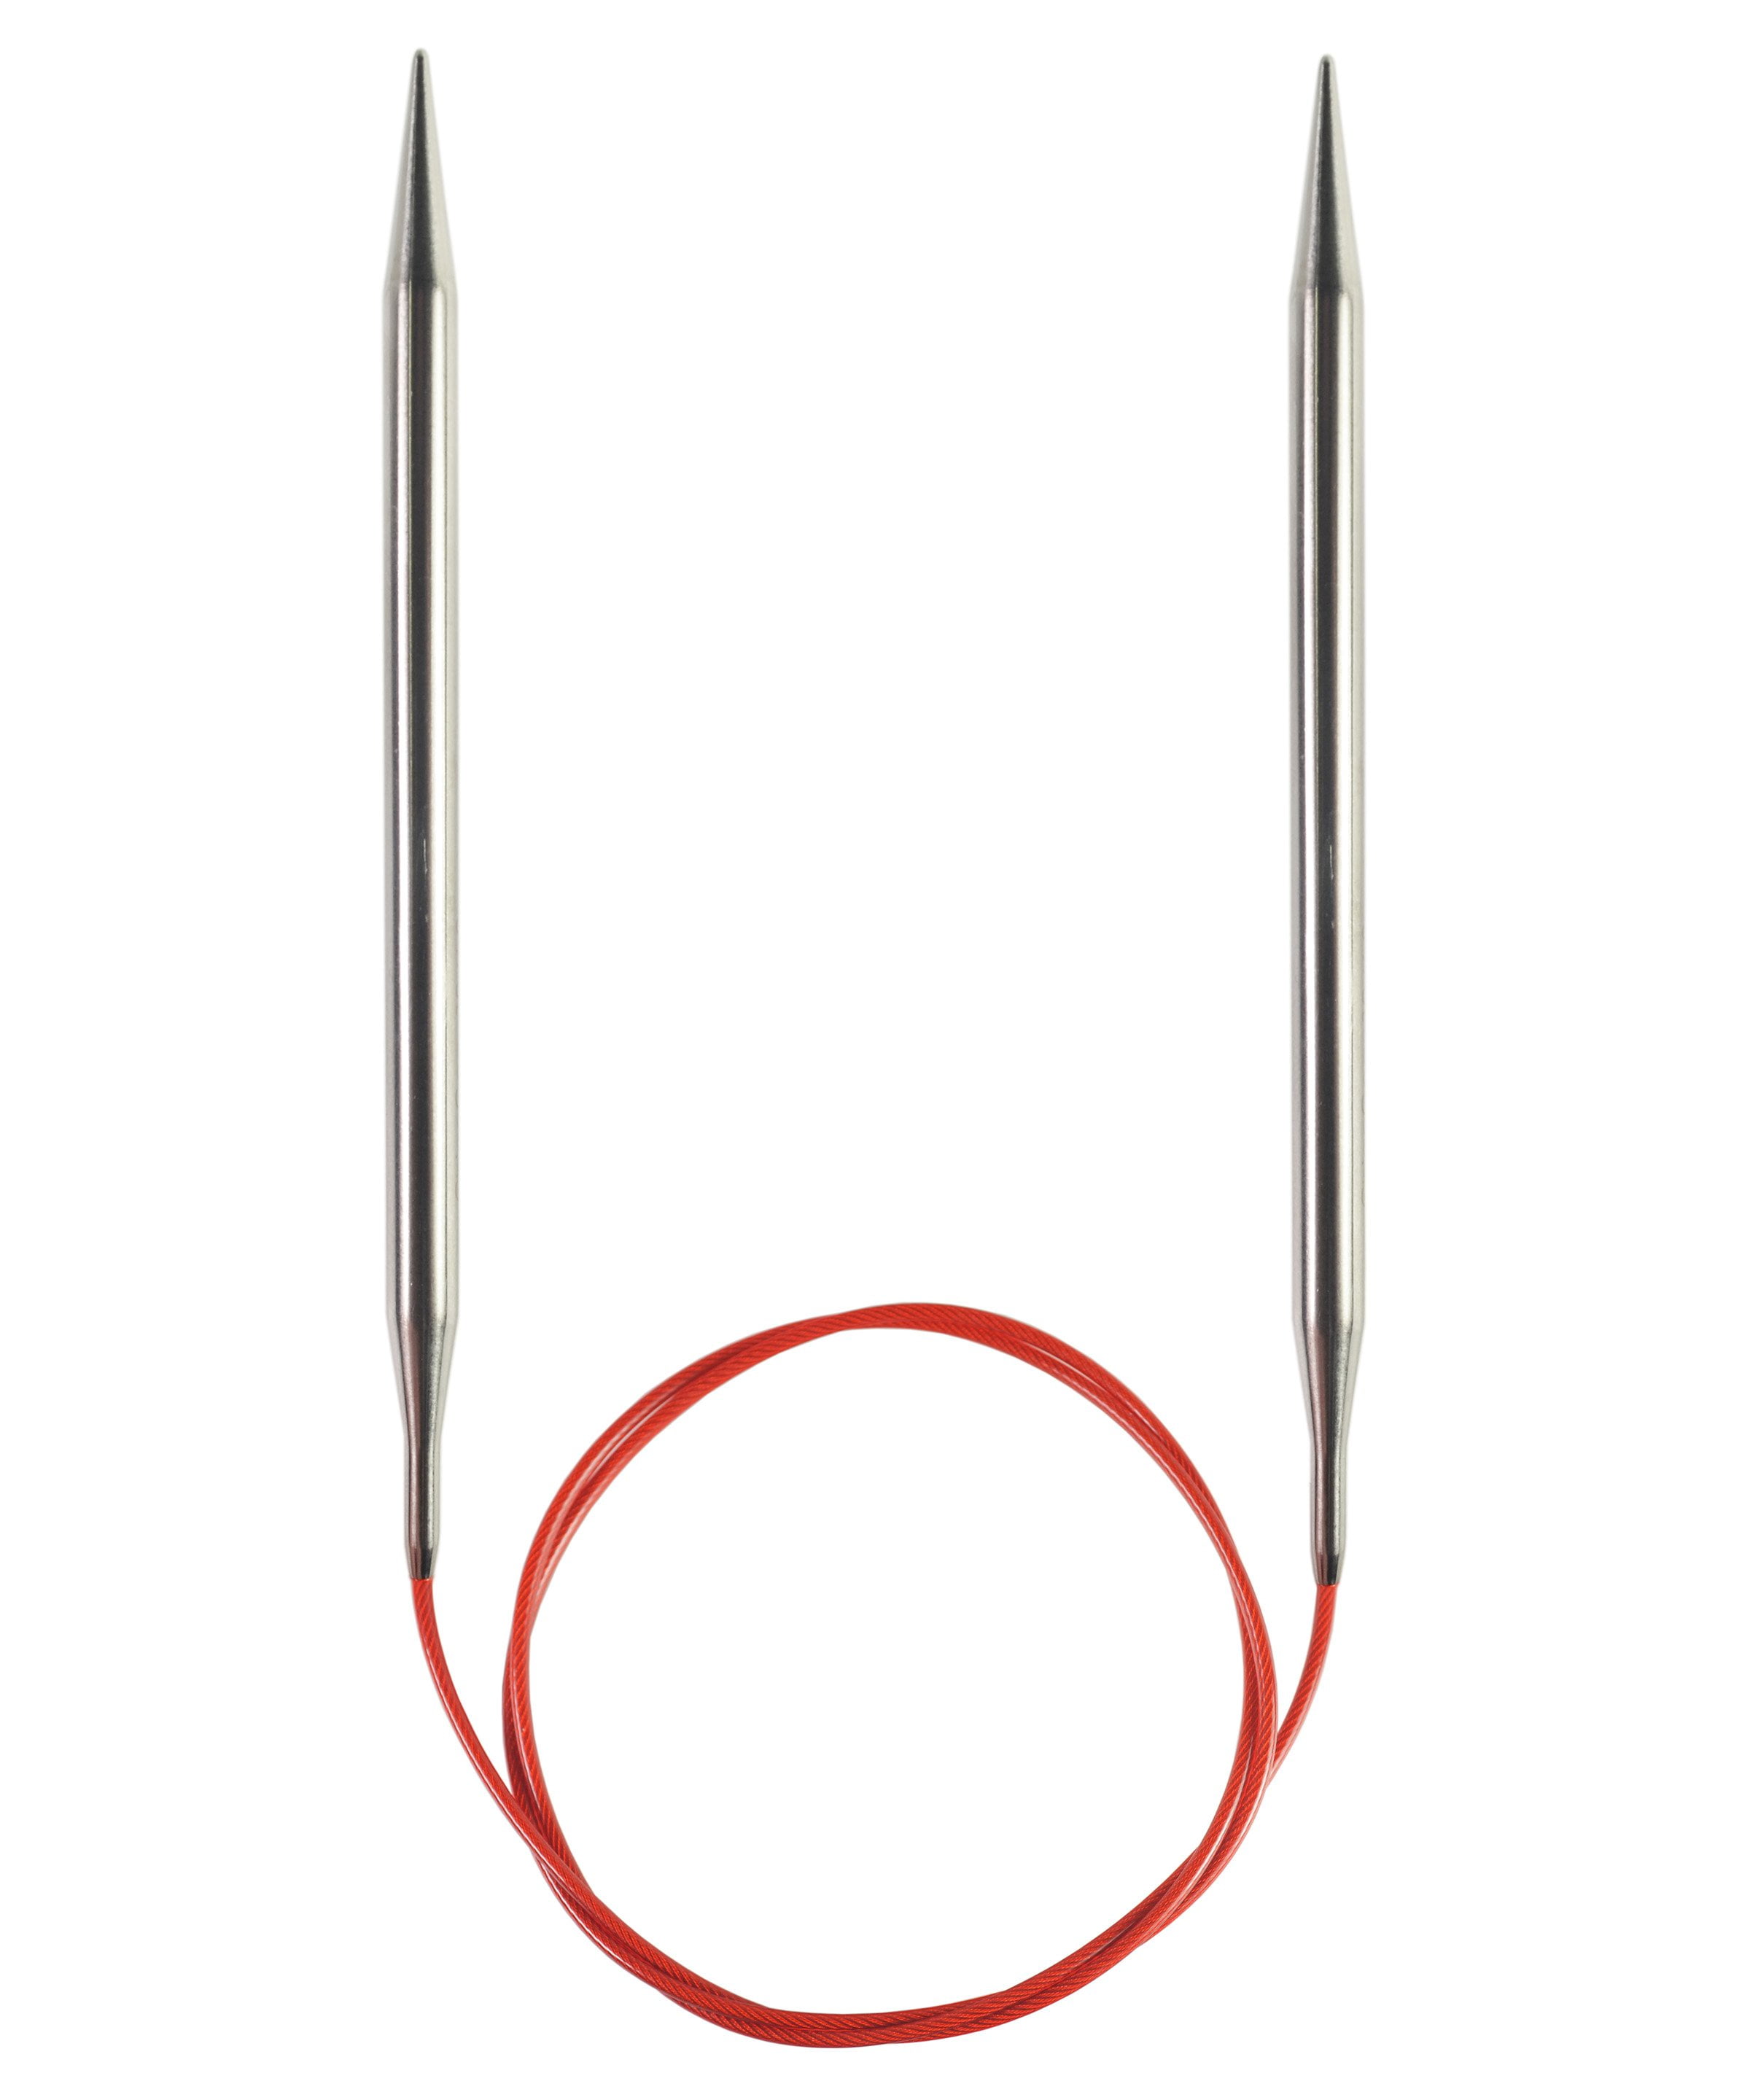 Chiaogoo Red Lace Circular Knitting Needles – Ullrike by Anki